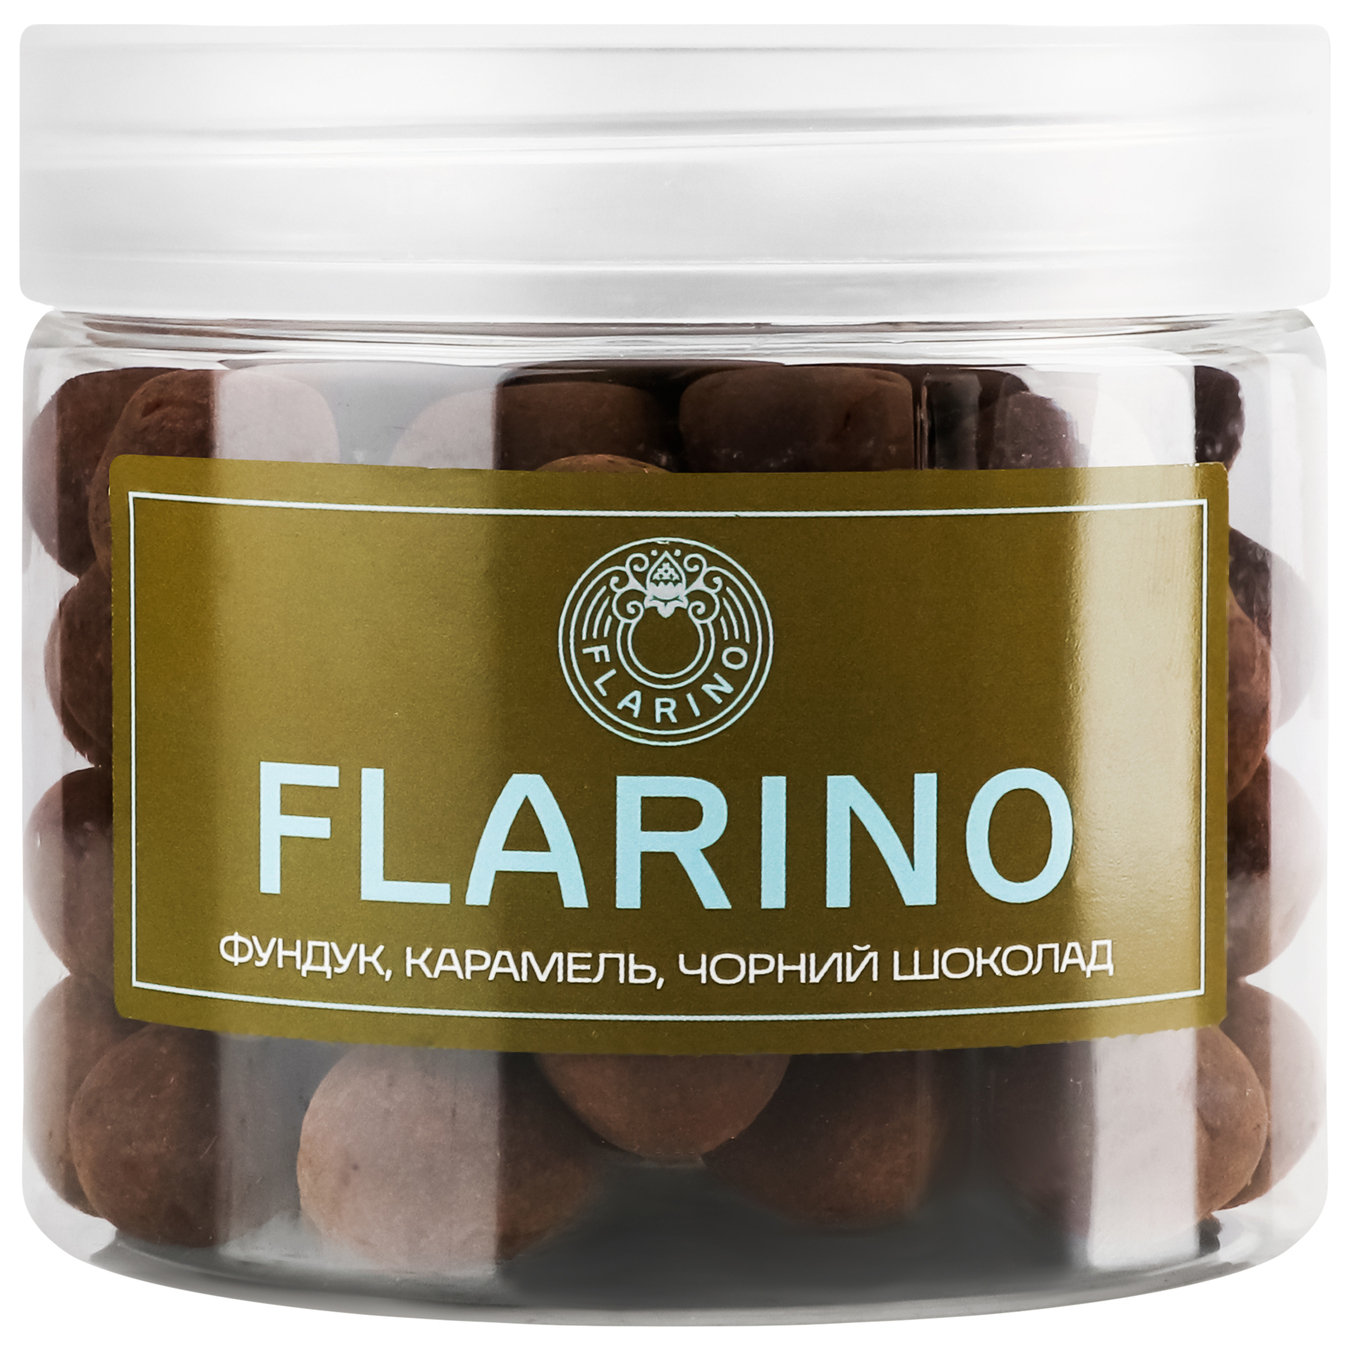 Flarino hazelnut in caramel covered with dark chocolate 180g